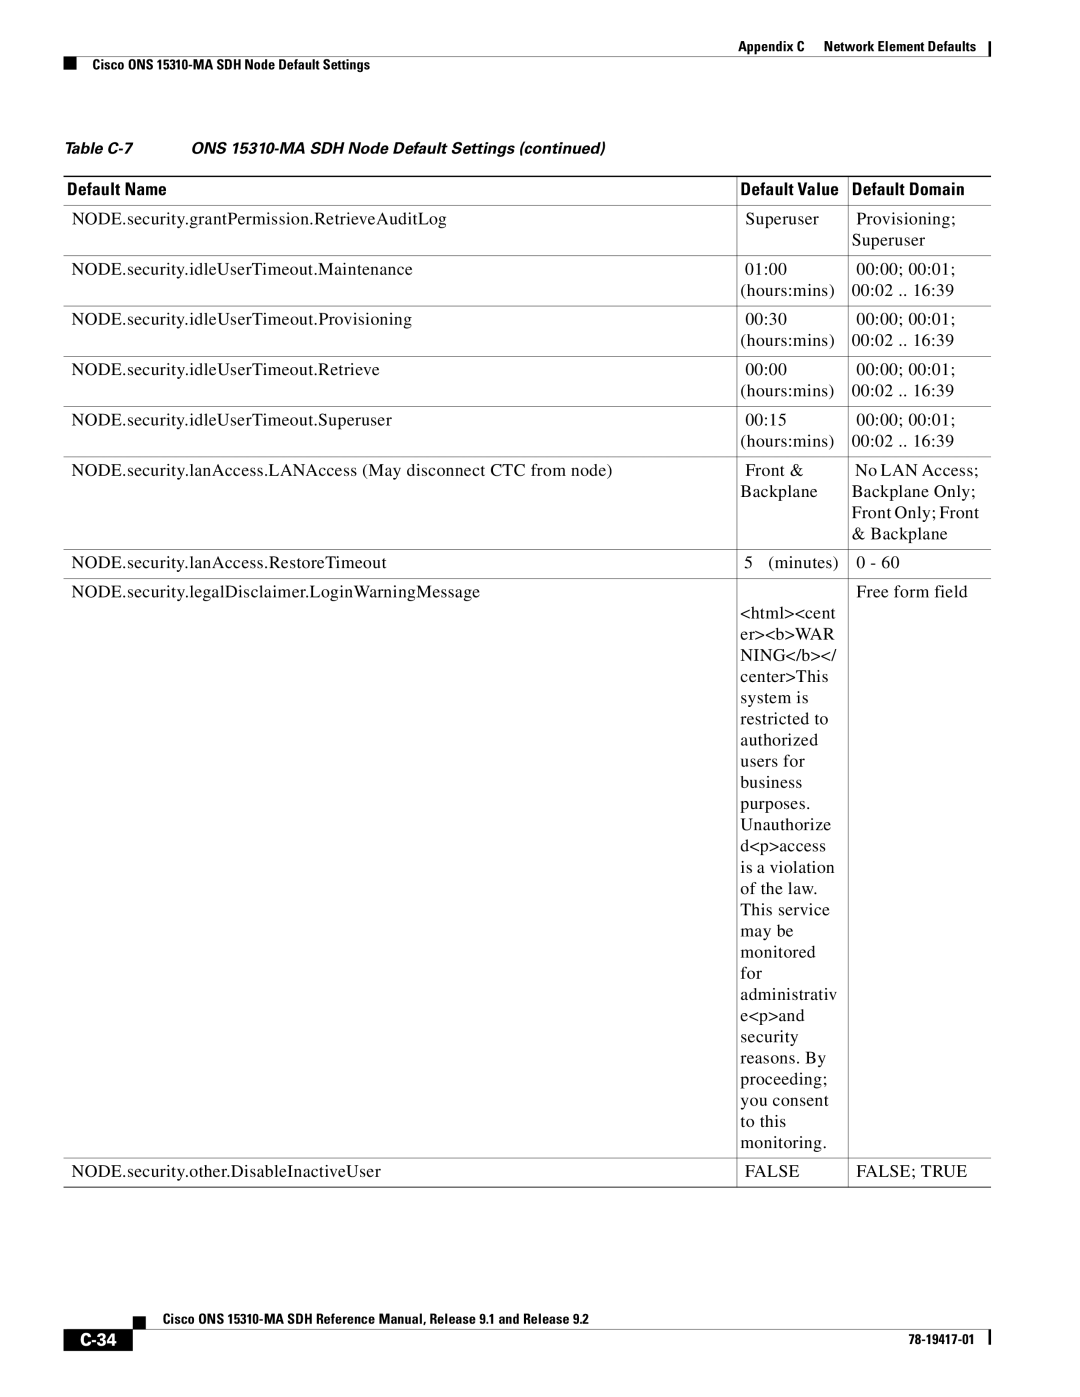 Cisco Systems 15310-MA manual Default Name 